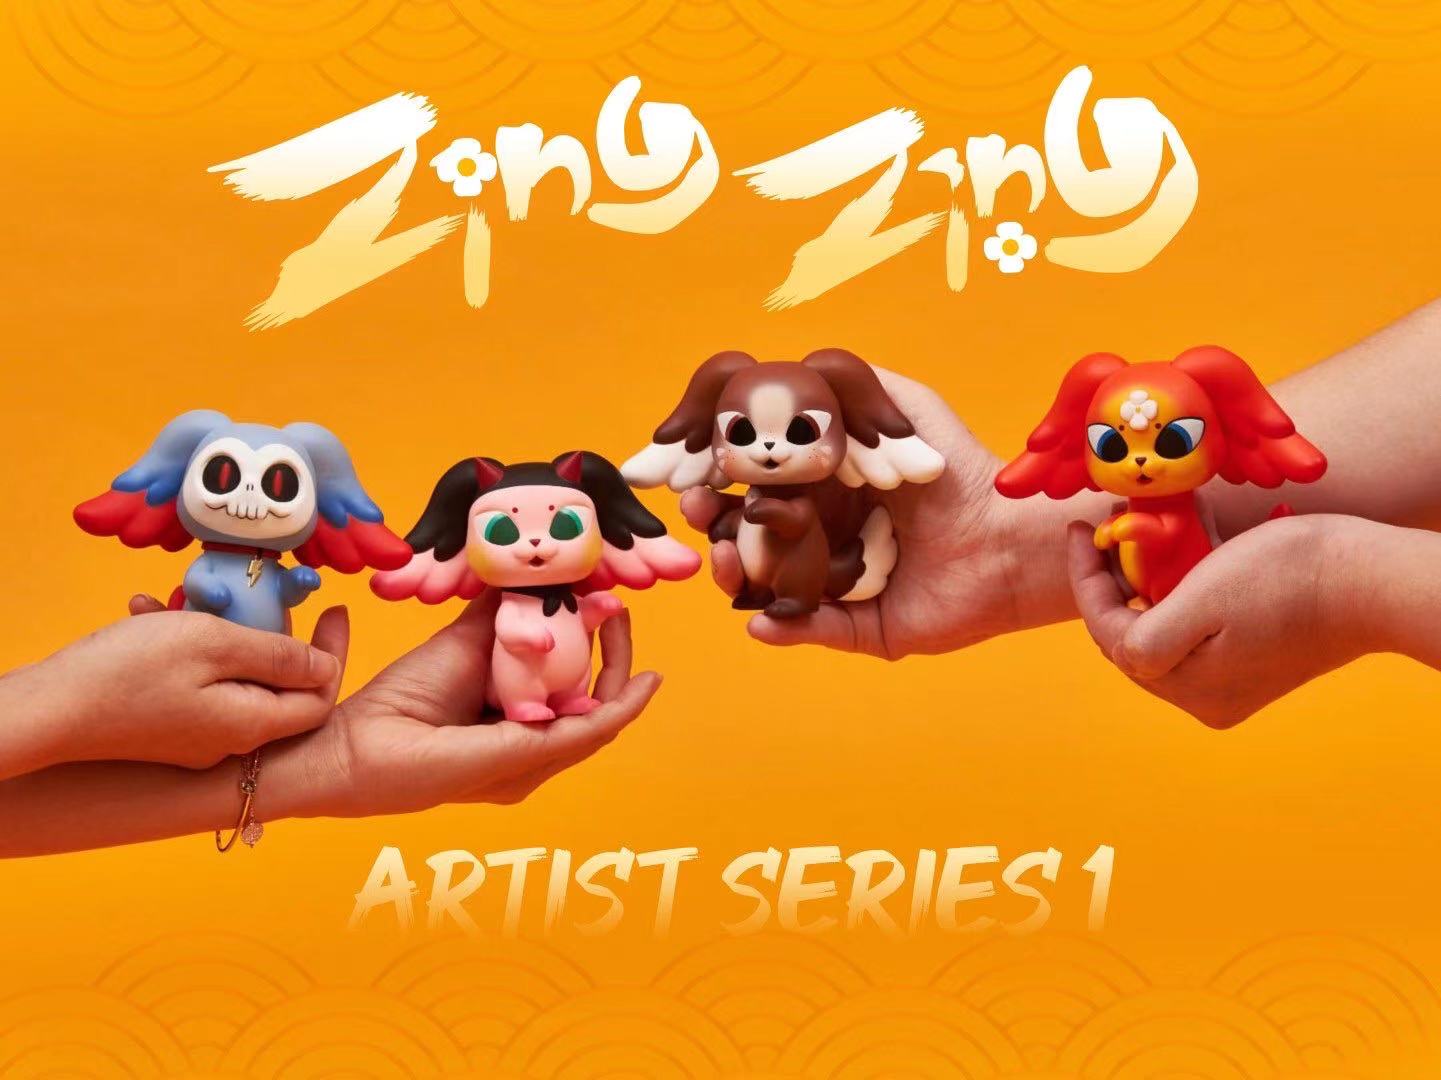 Zing Zing Artist Series 1 by Zing Zing